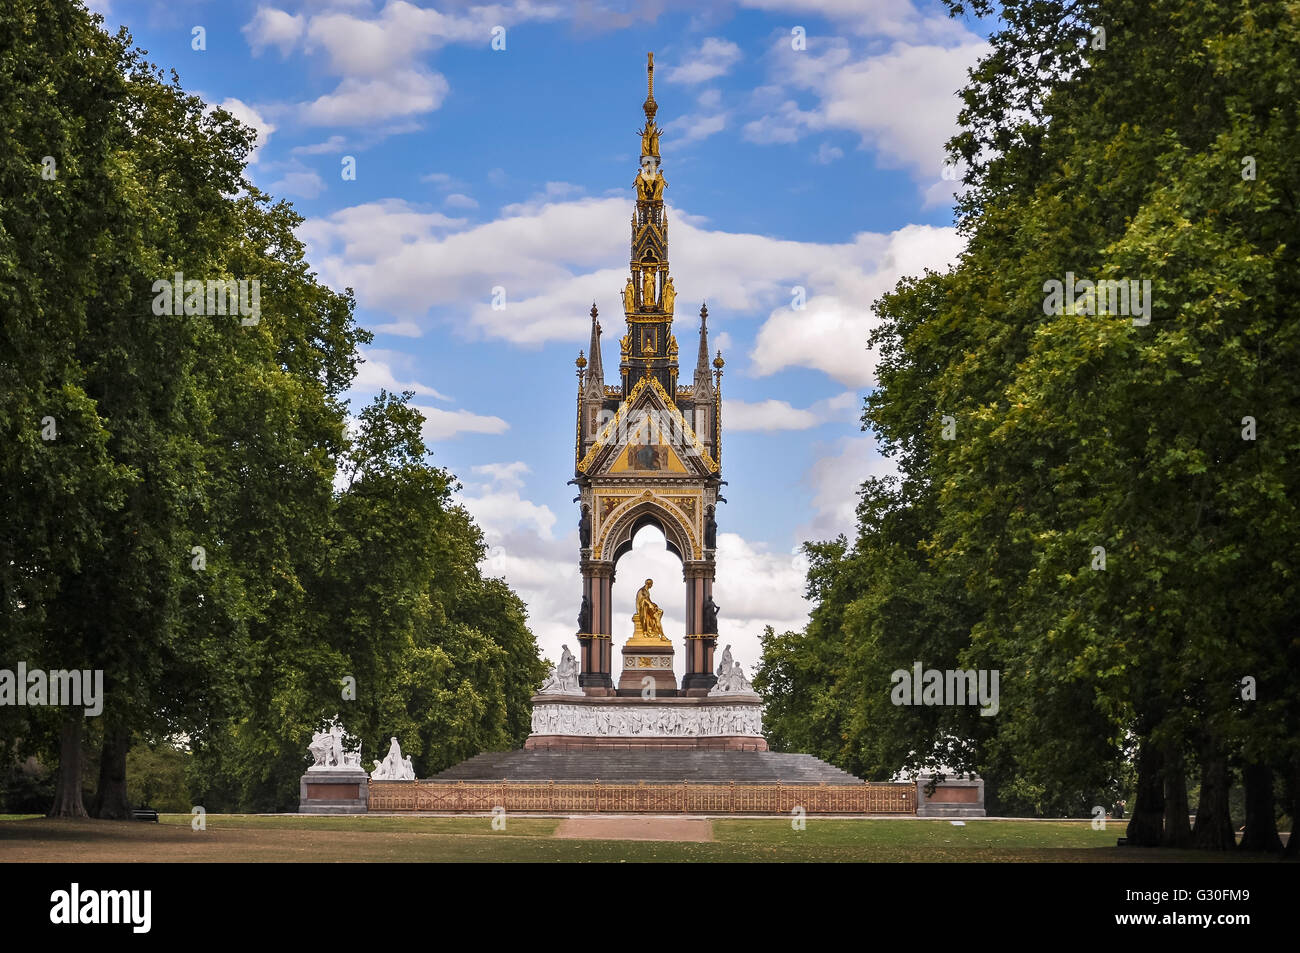 The Albert Memorial in London, United Kingdom Stock Photo